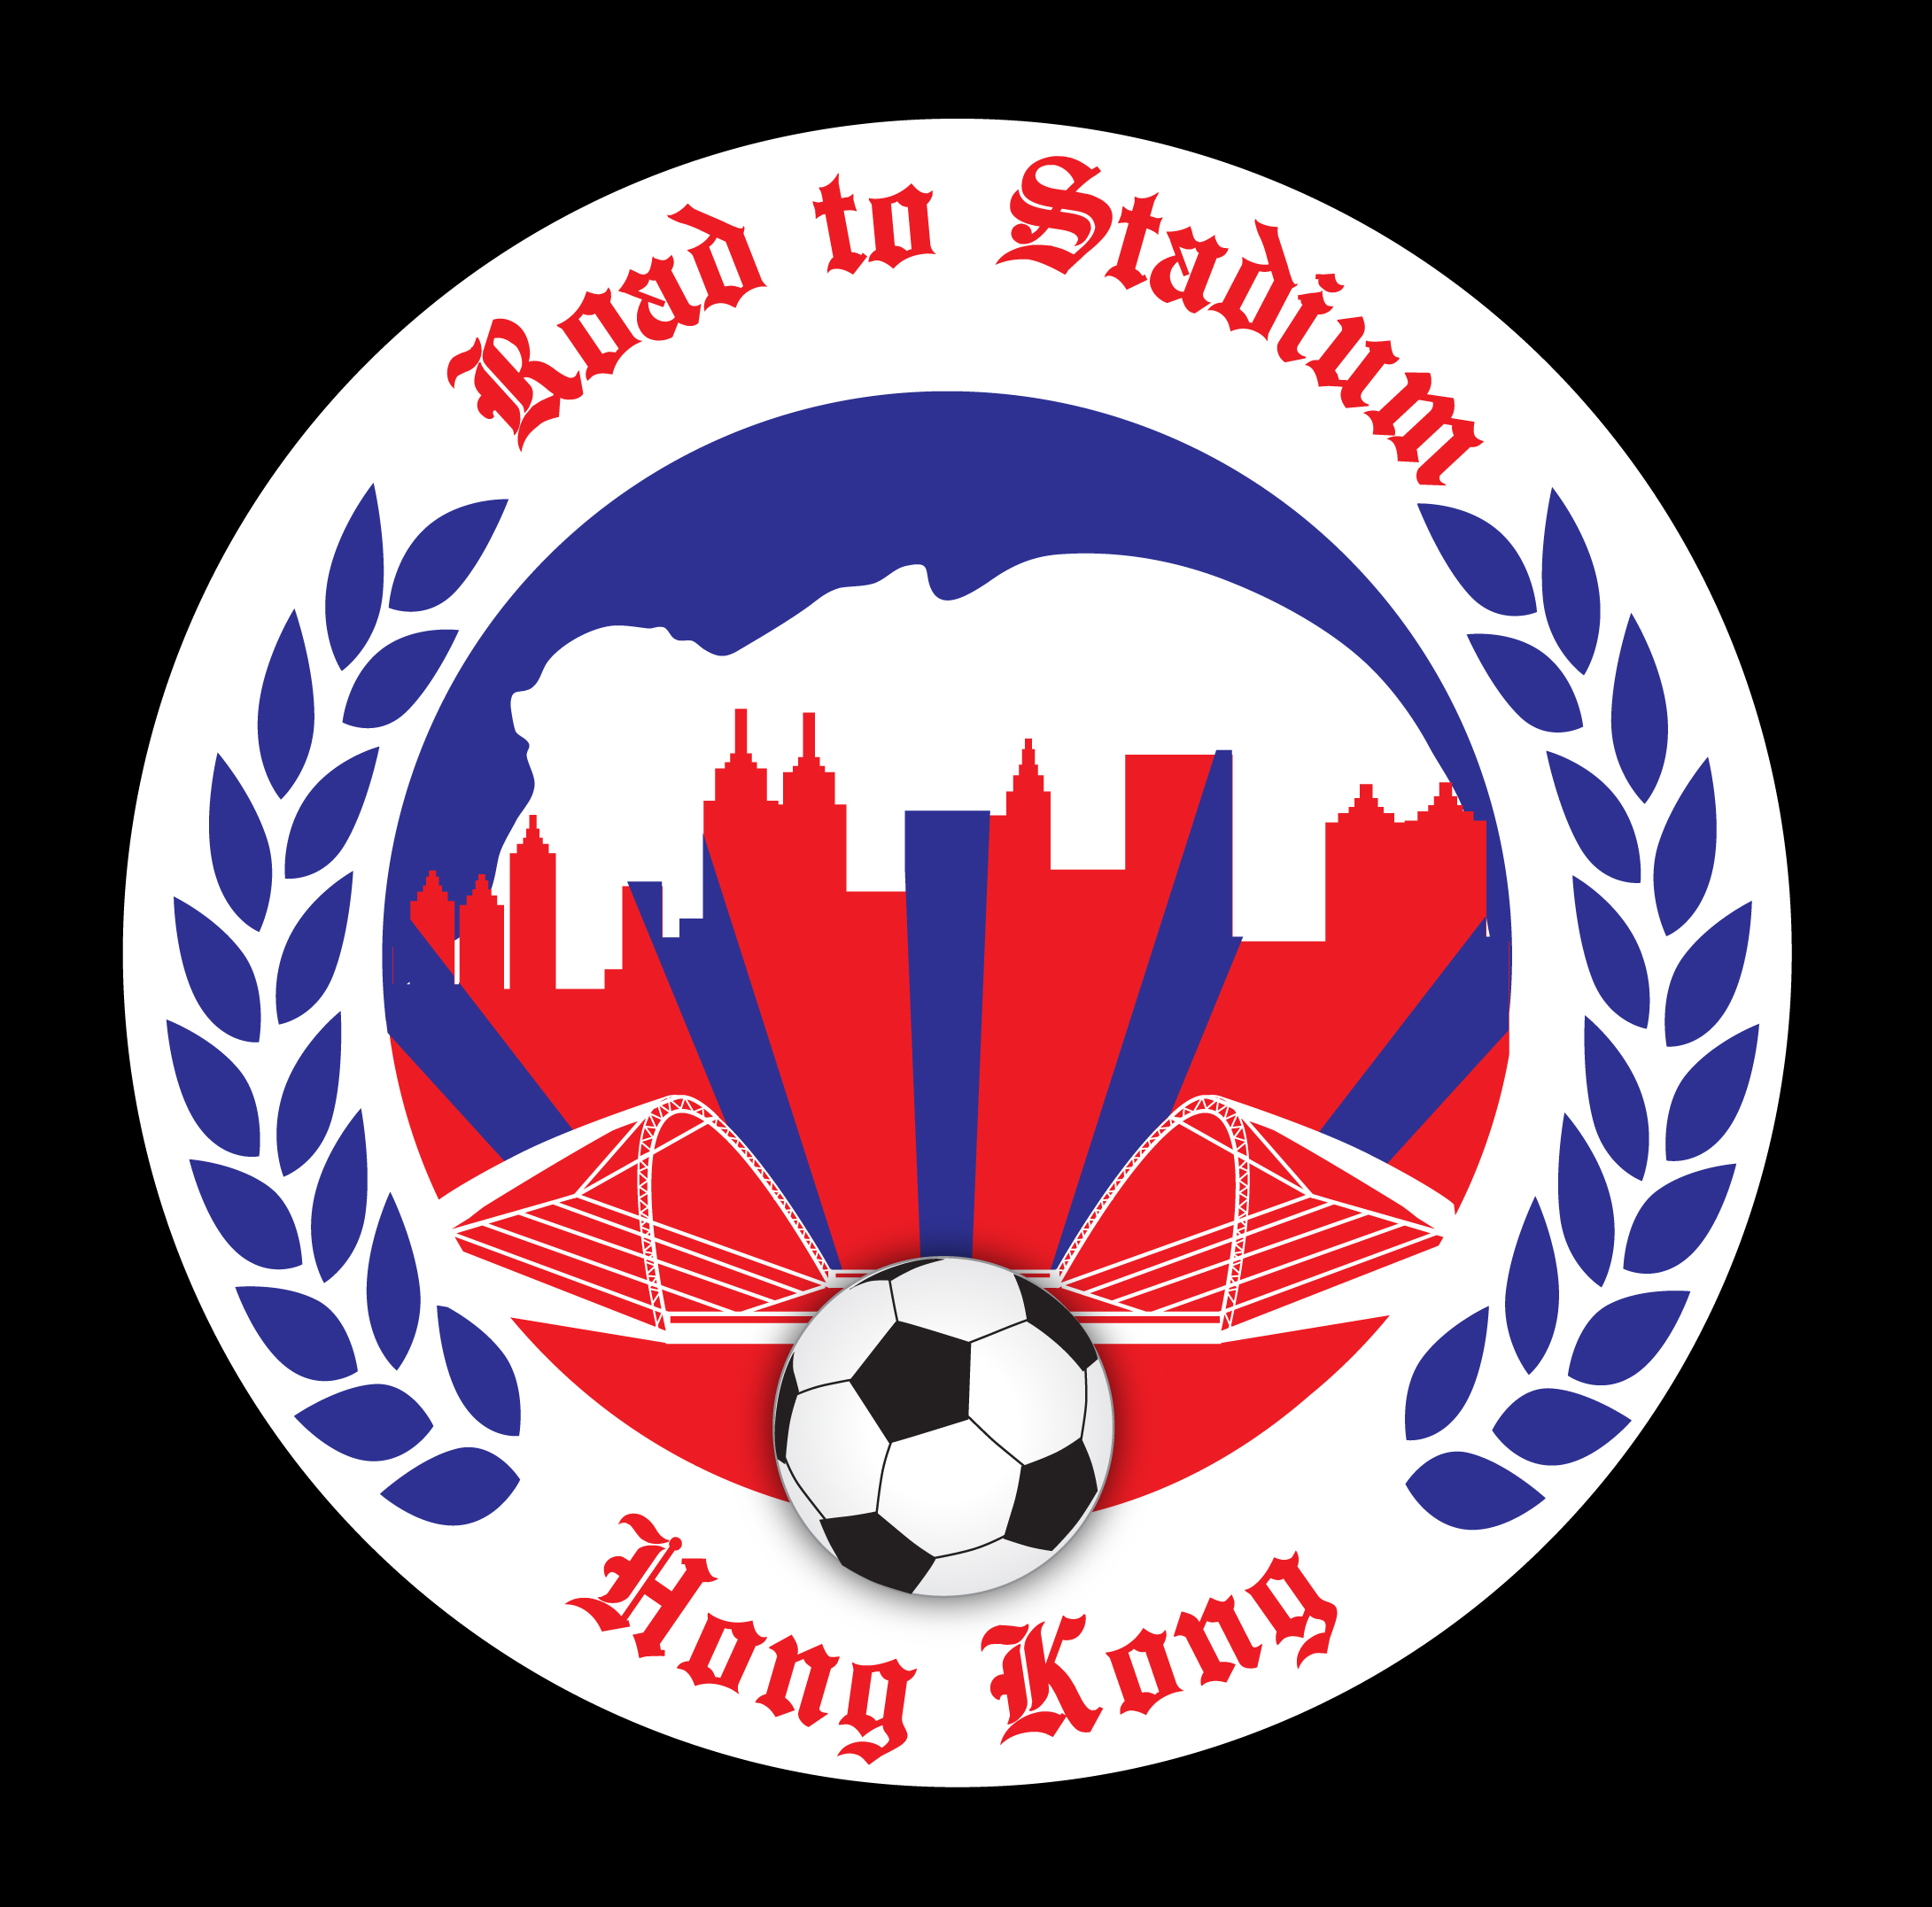 SL_LO_0024_V1-3 road to stadium logo.jpg